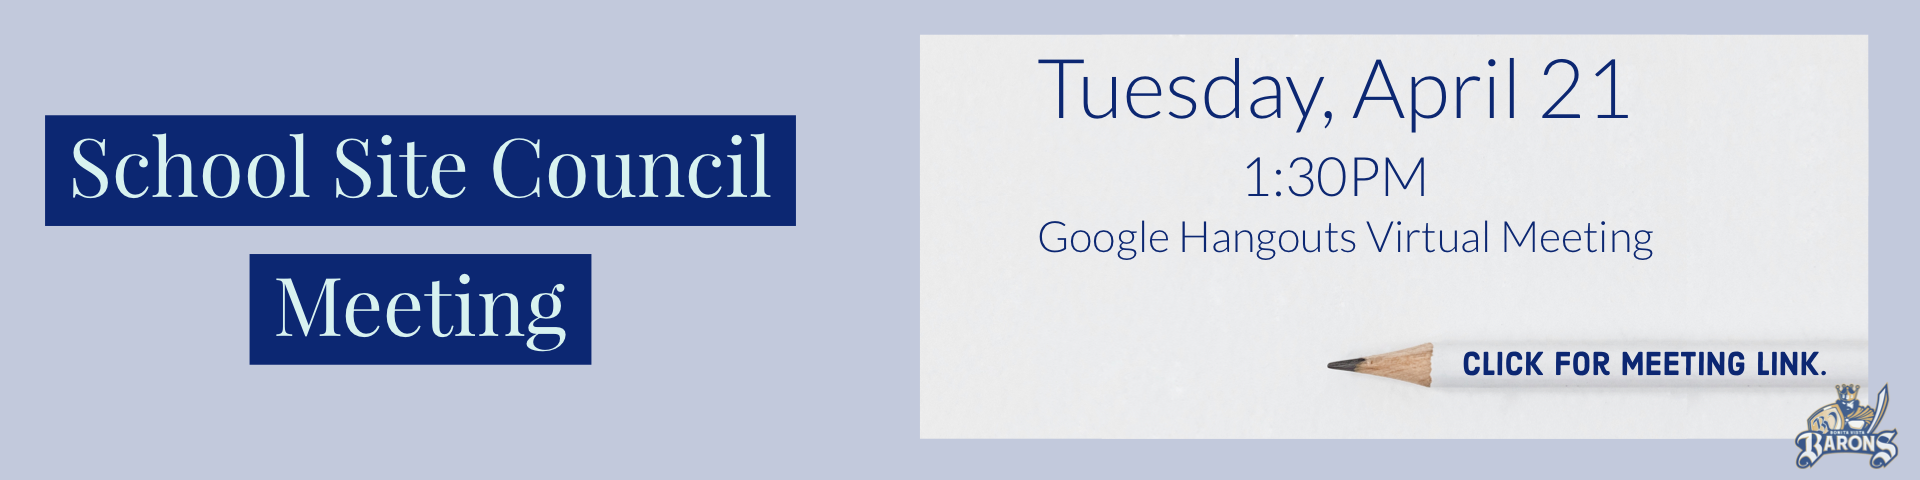 School Site Council Virtual Meeting Via Google Hangouts On Tuesday April 21 at 1:30pm.